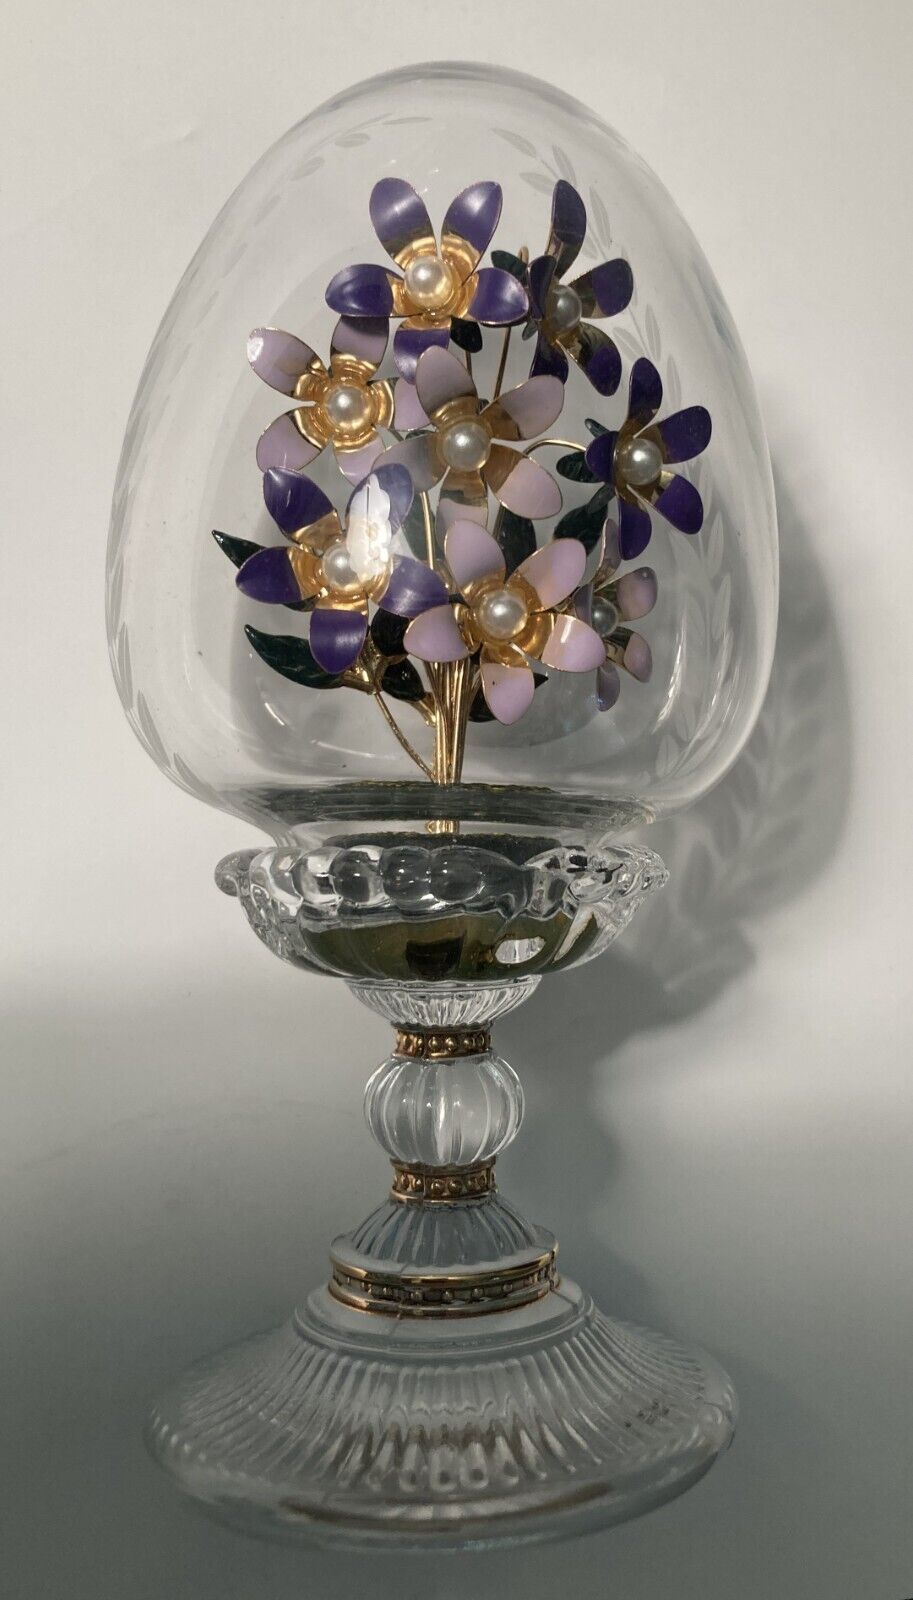 House of Faberge Egg Franklin Mint Crystal Purple Violets Pearls Bouquet Austria